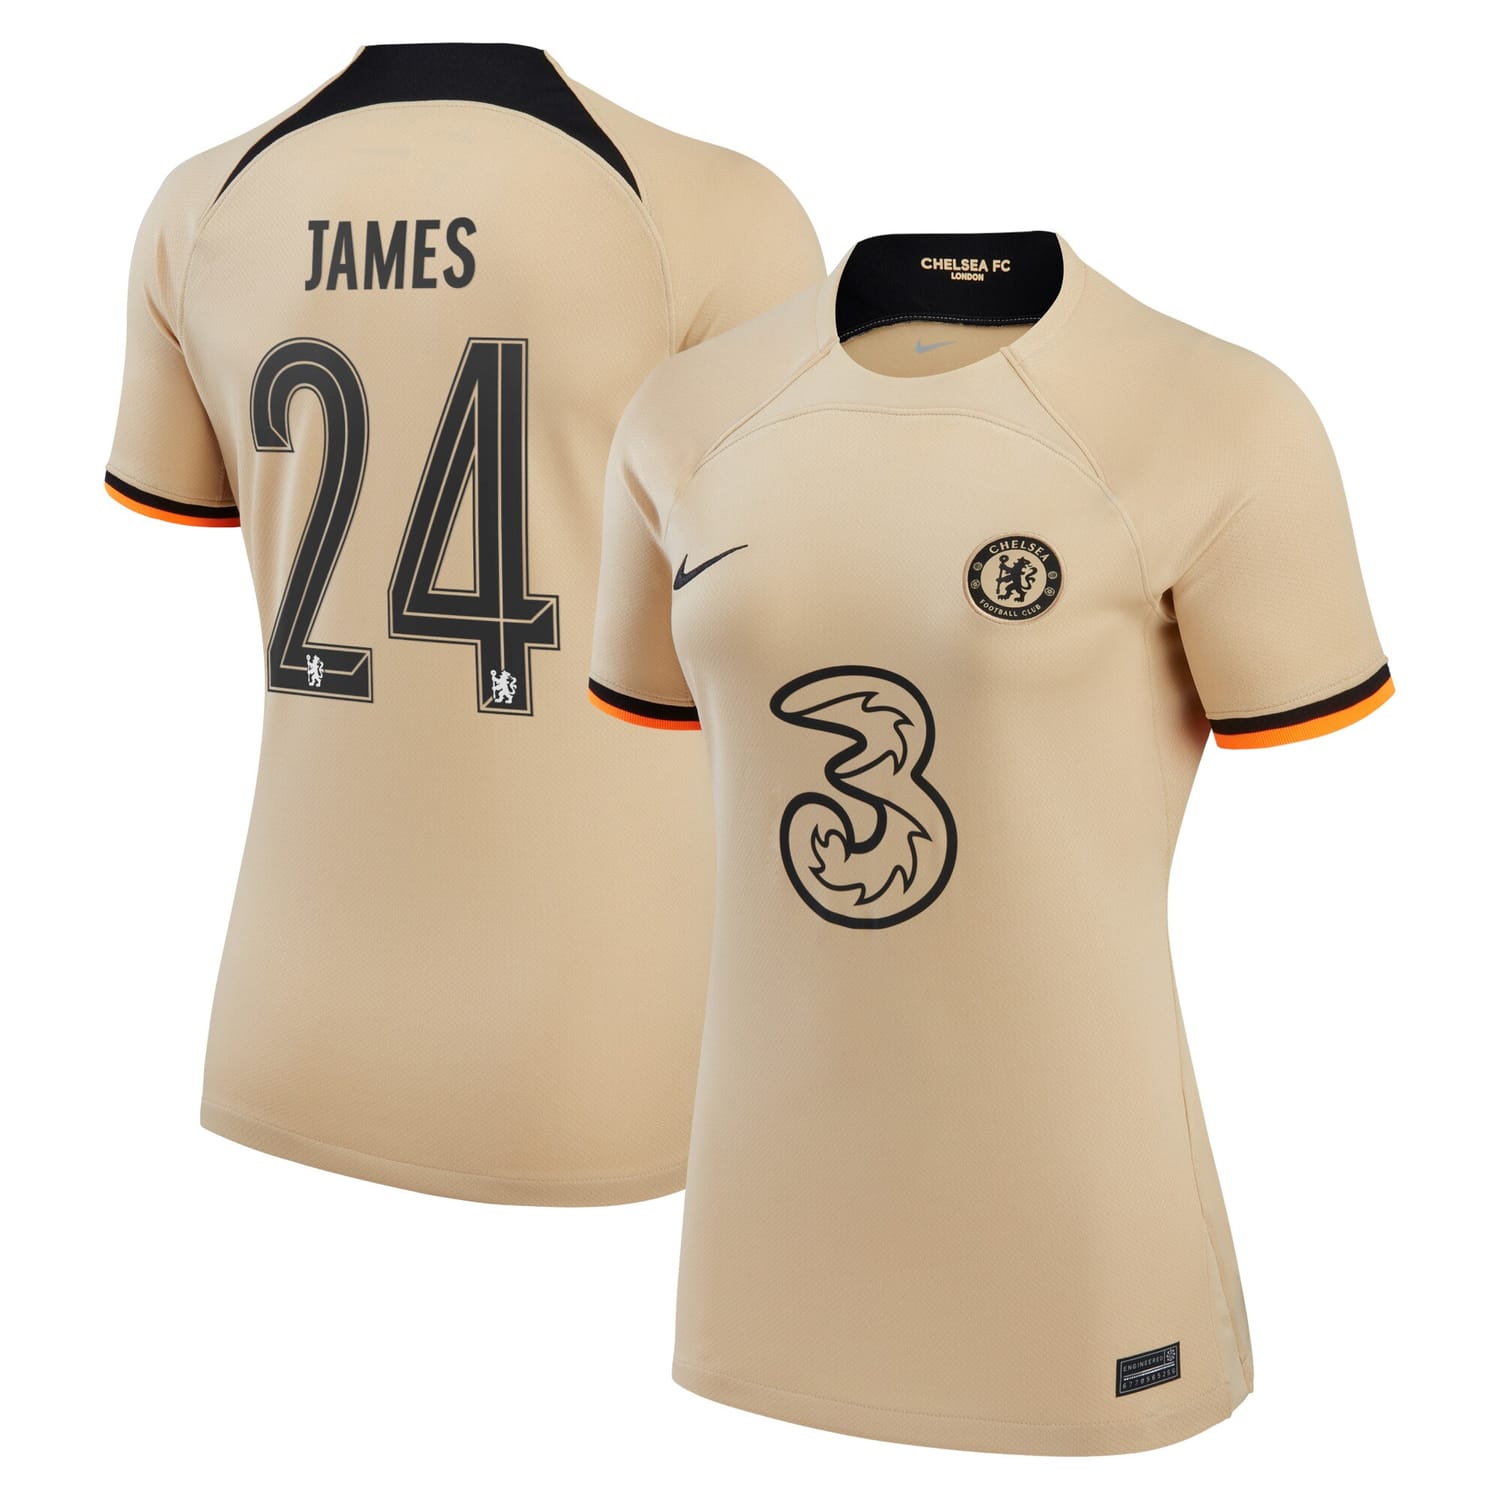 Premier League Chelsea Third Cup Jersey Shirt 2022-23 player Reece James 24 printing for Women